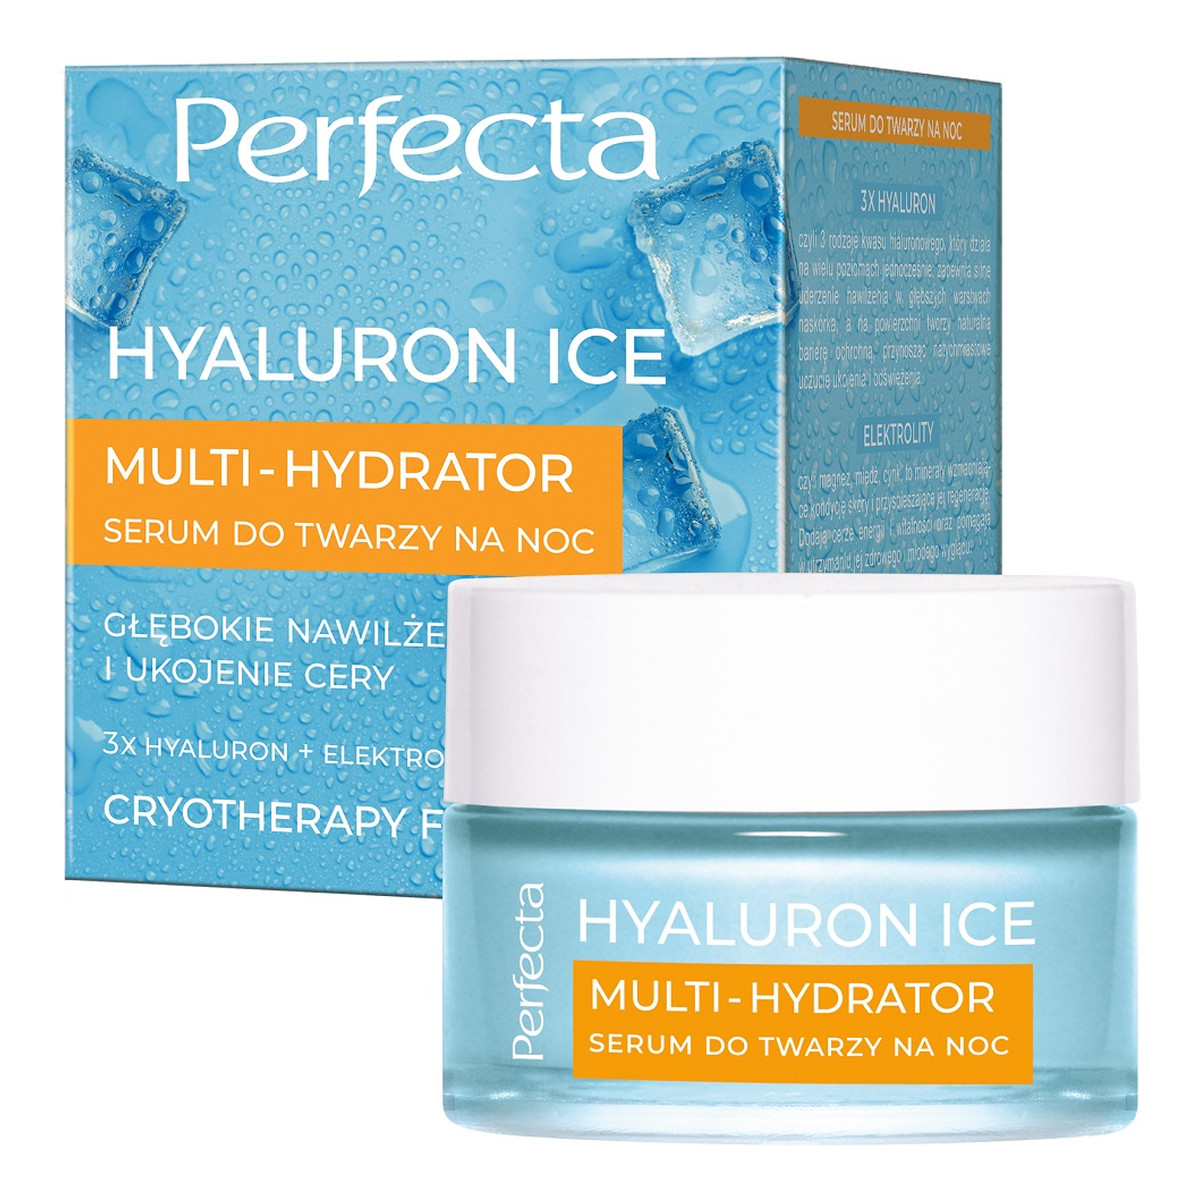 Perfecta Hyaluron ice multi-hydrator serum do twarzy na noc 50ml